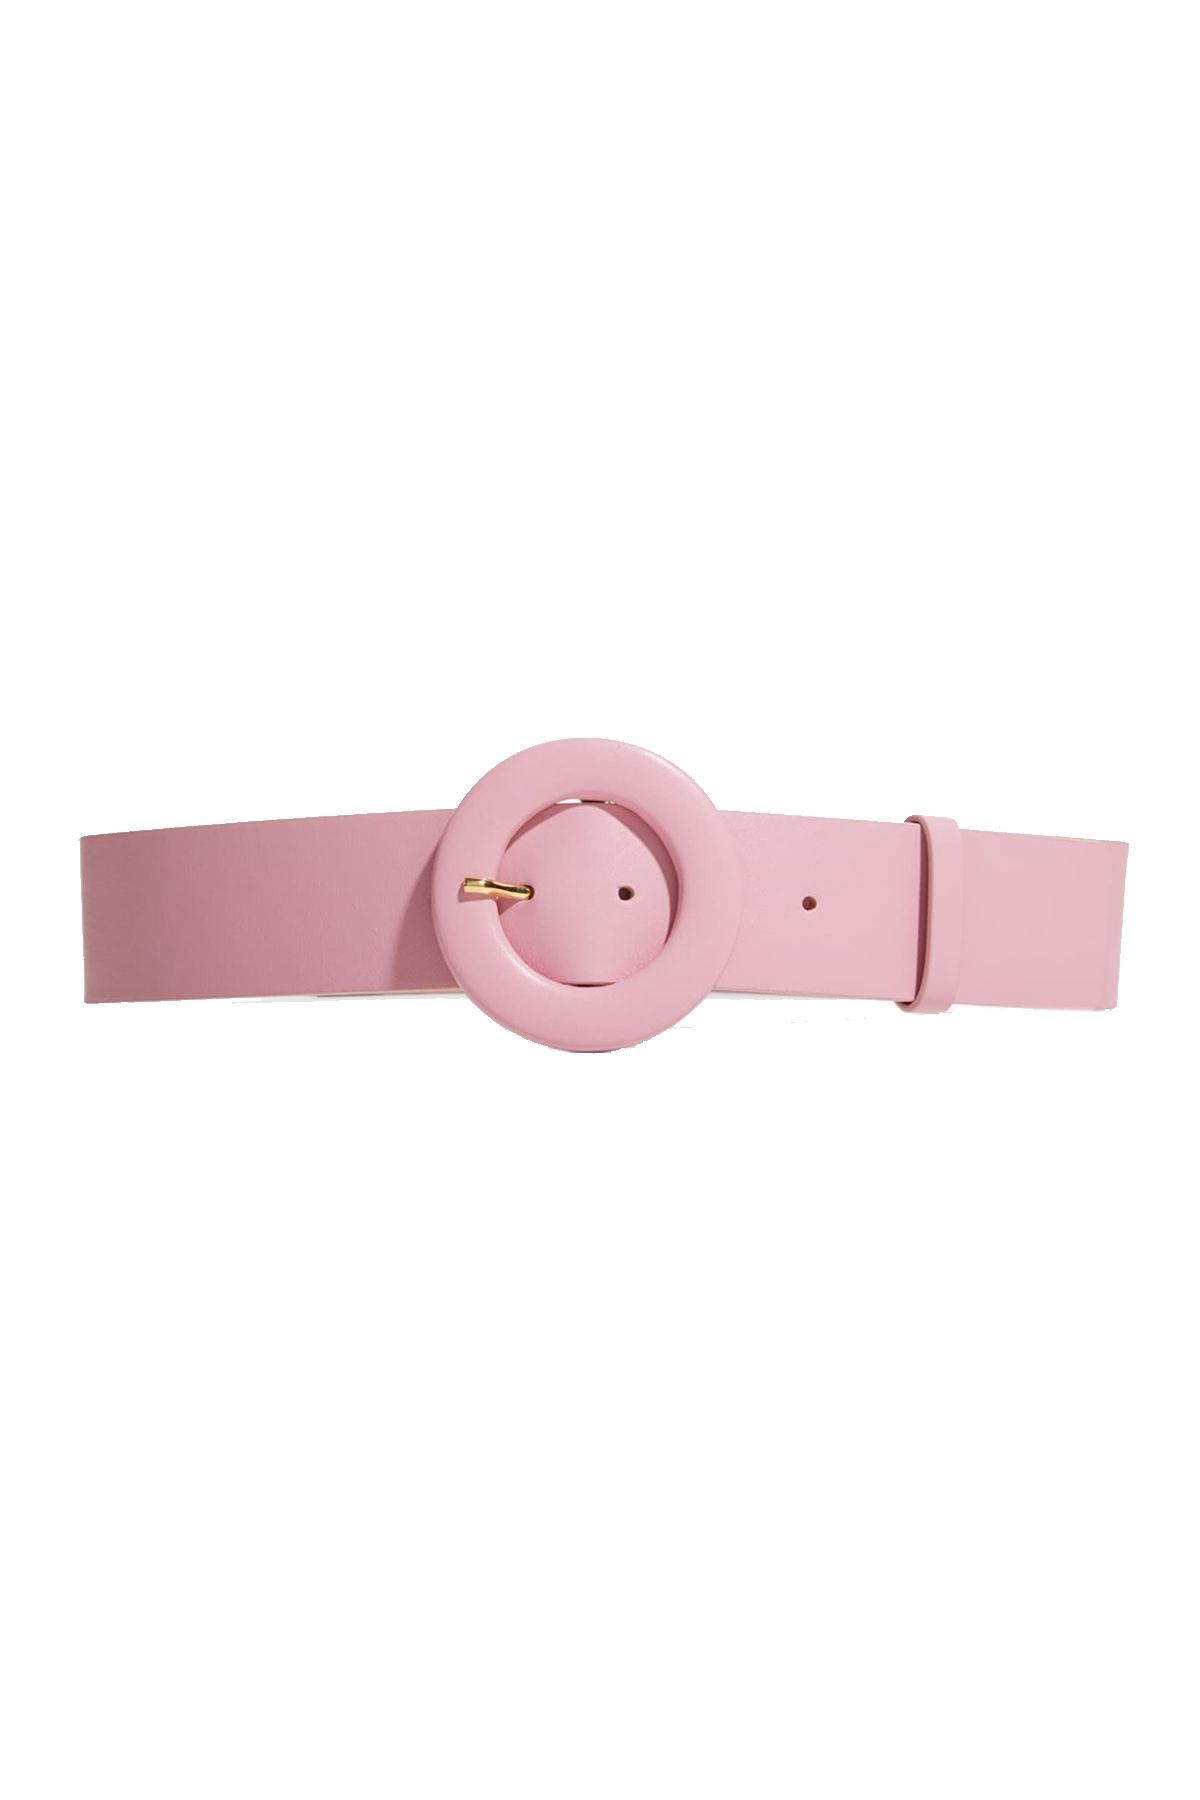 NoName belt discount 50% WOMEN FASHION Accessories Belt Pink Pink Single 